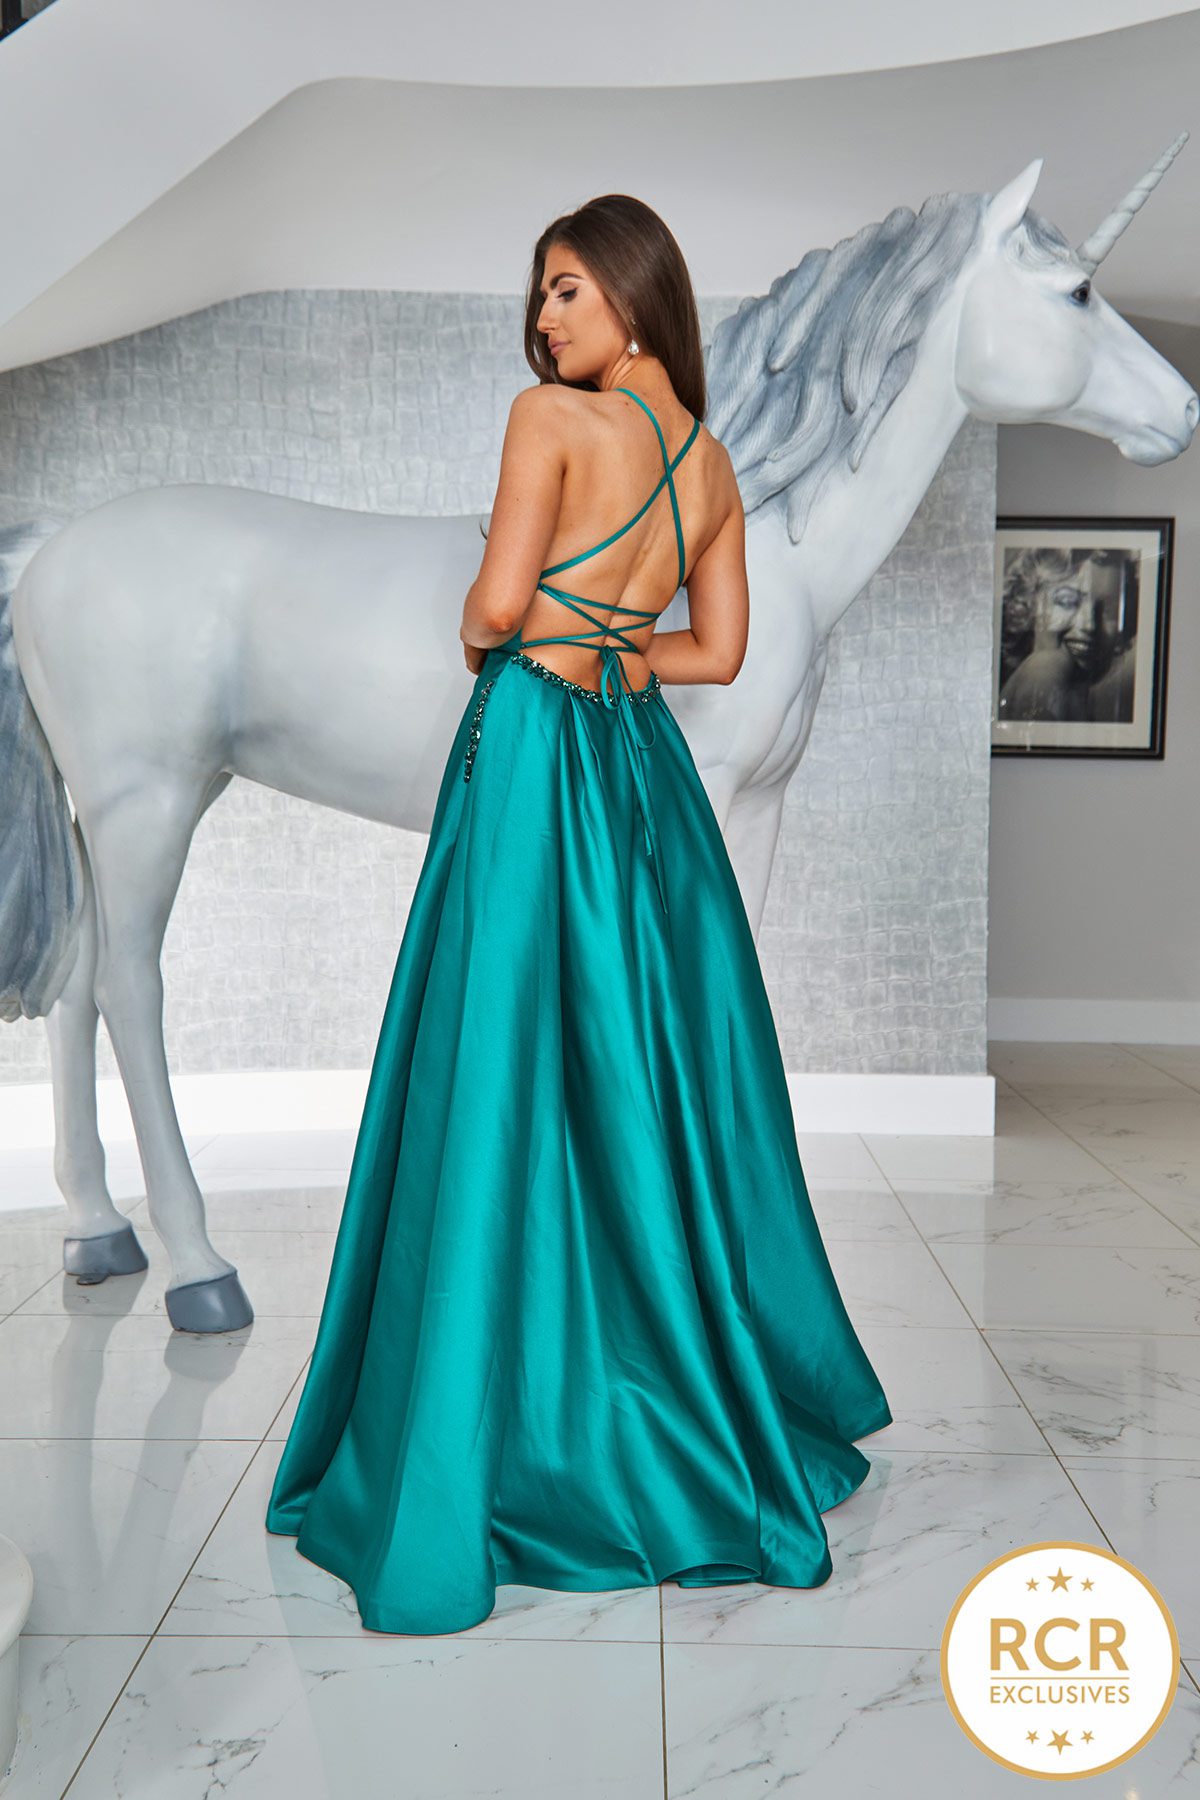 Amazon.com: Emerald Green Evening Gown